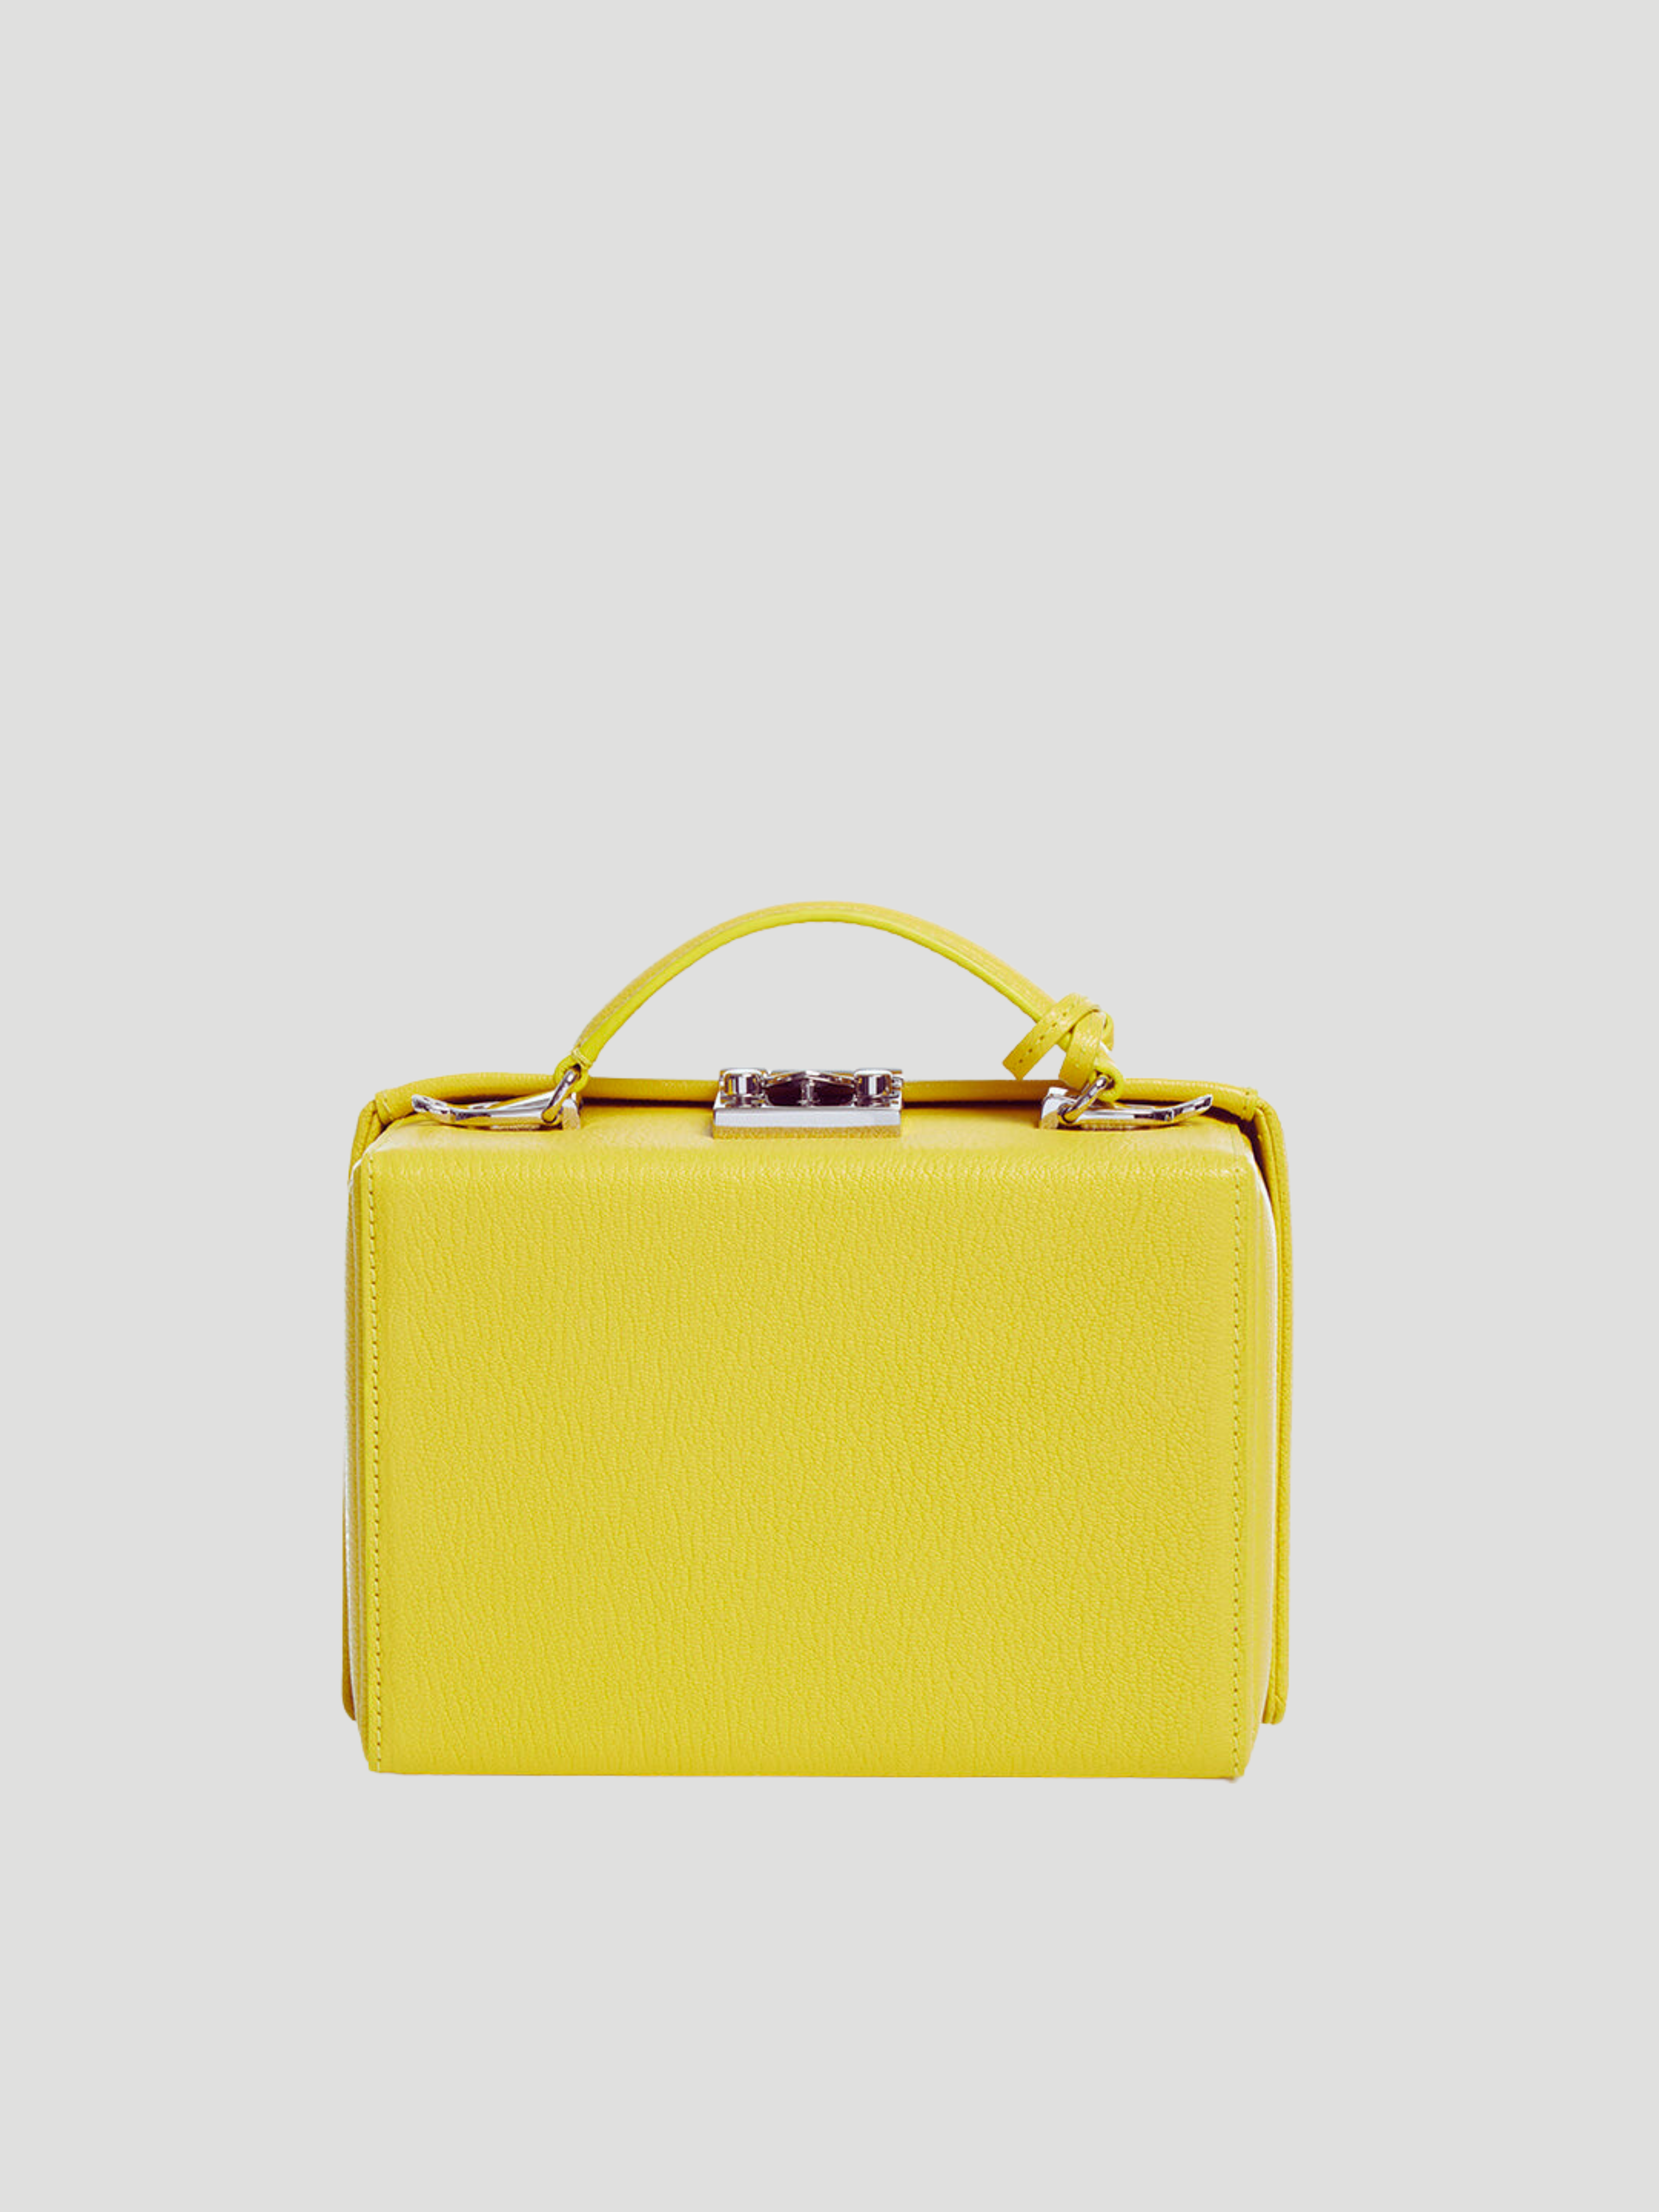 Beiyasi Girls Lemon Strawberry Milk Box Crossbody Purse Bag Women Phone  Wallet Shoulder Handbag Yellow : Amazon.co.uk: Fashion